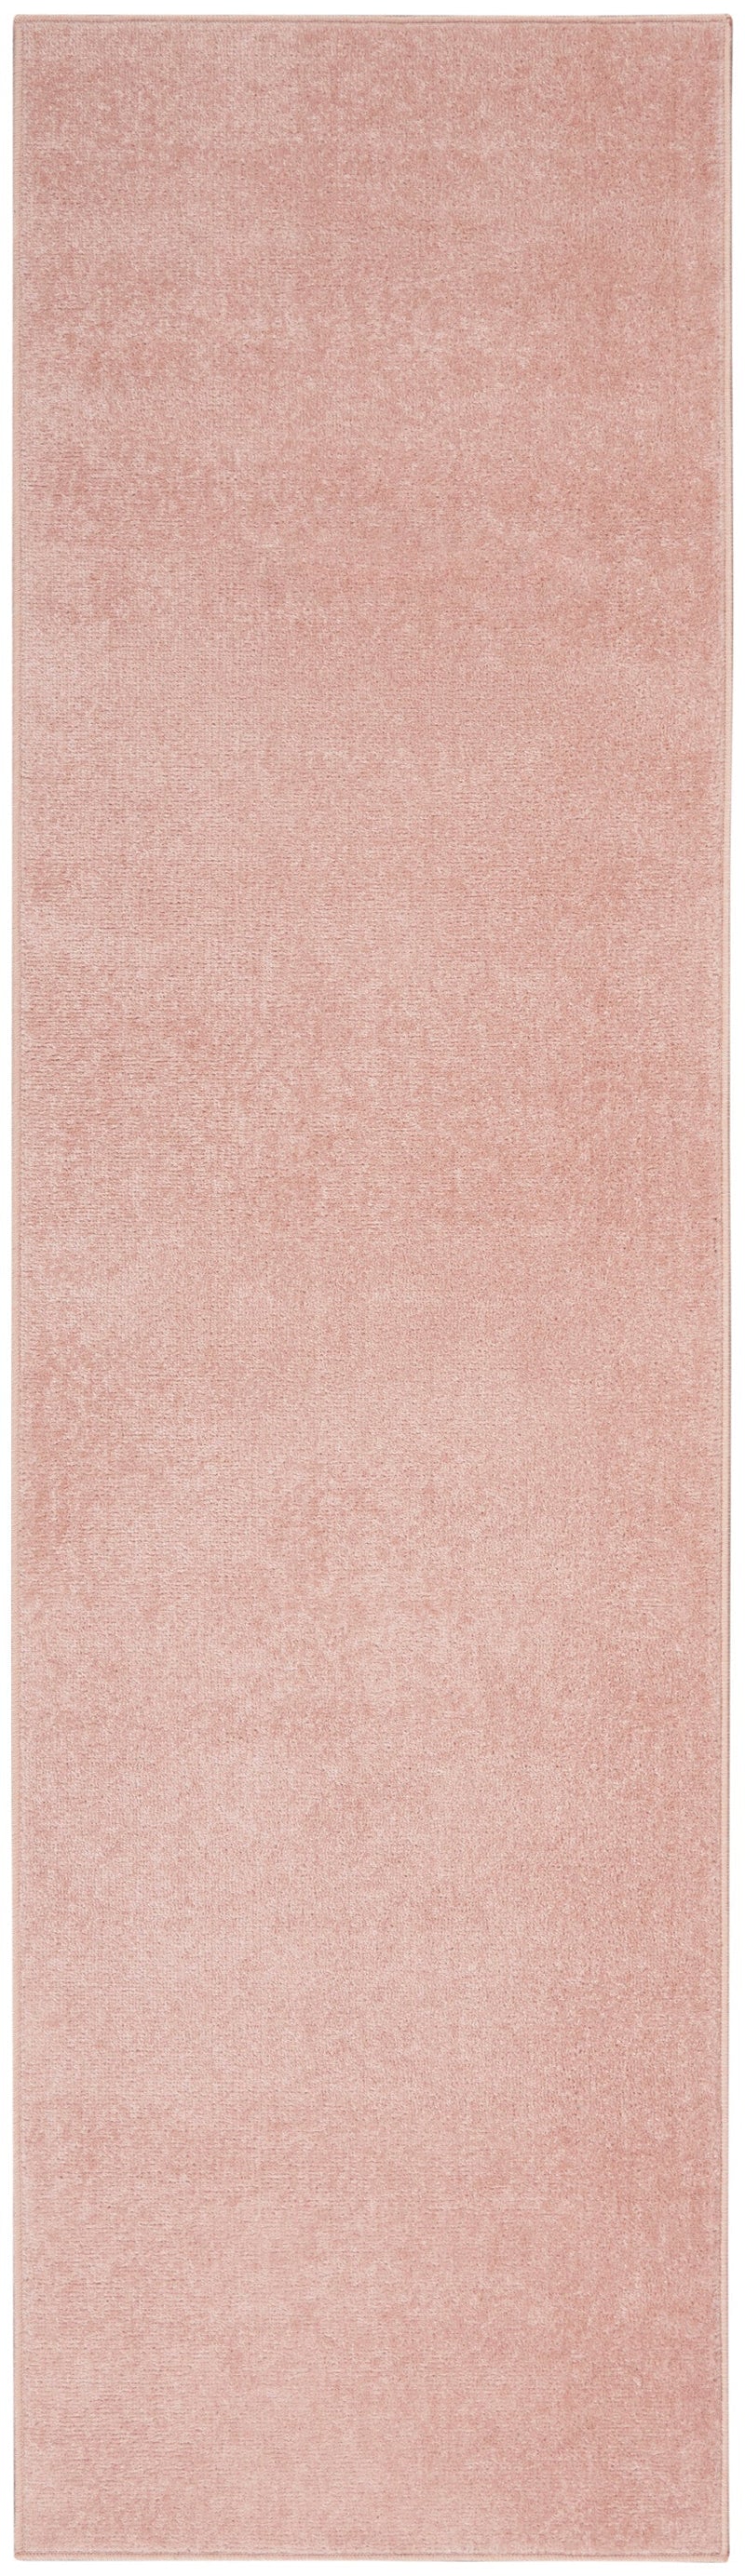 media image for nourison essentials pink rug by nourison 99446824776 redo 4 234